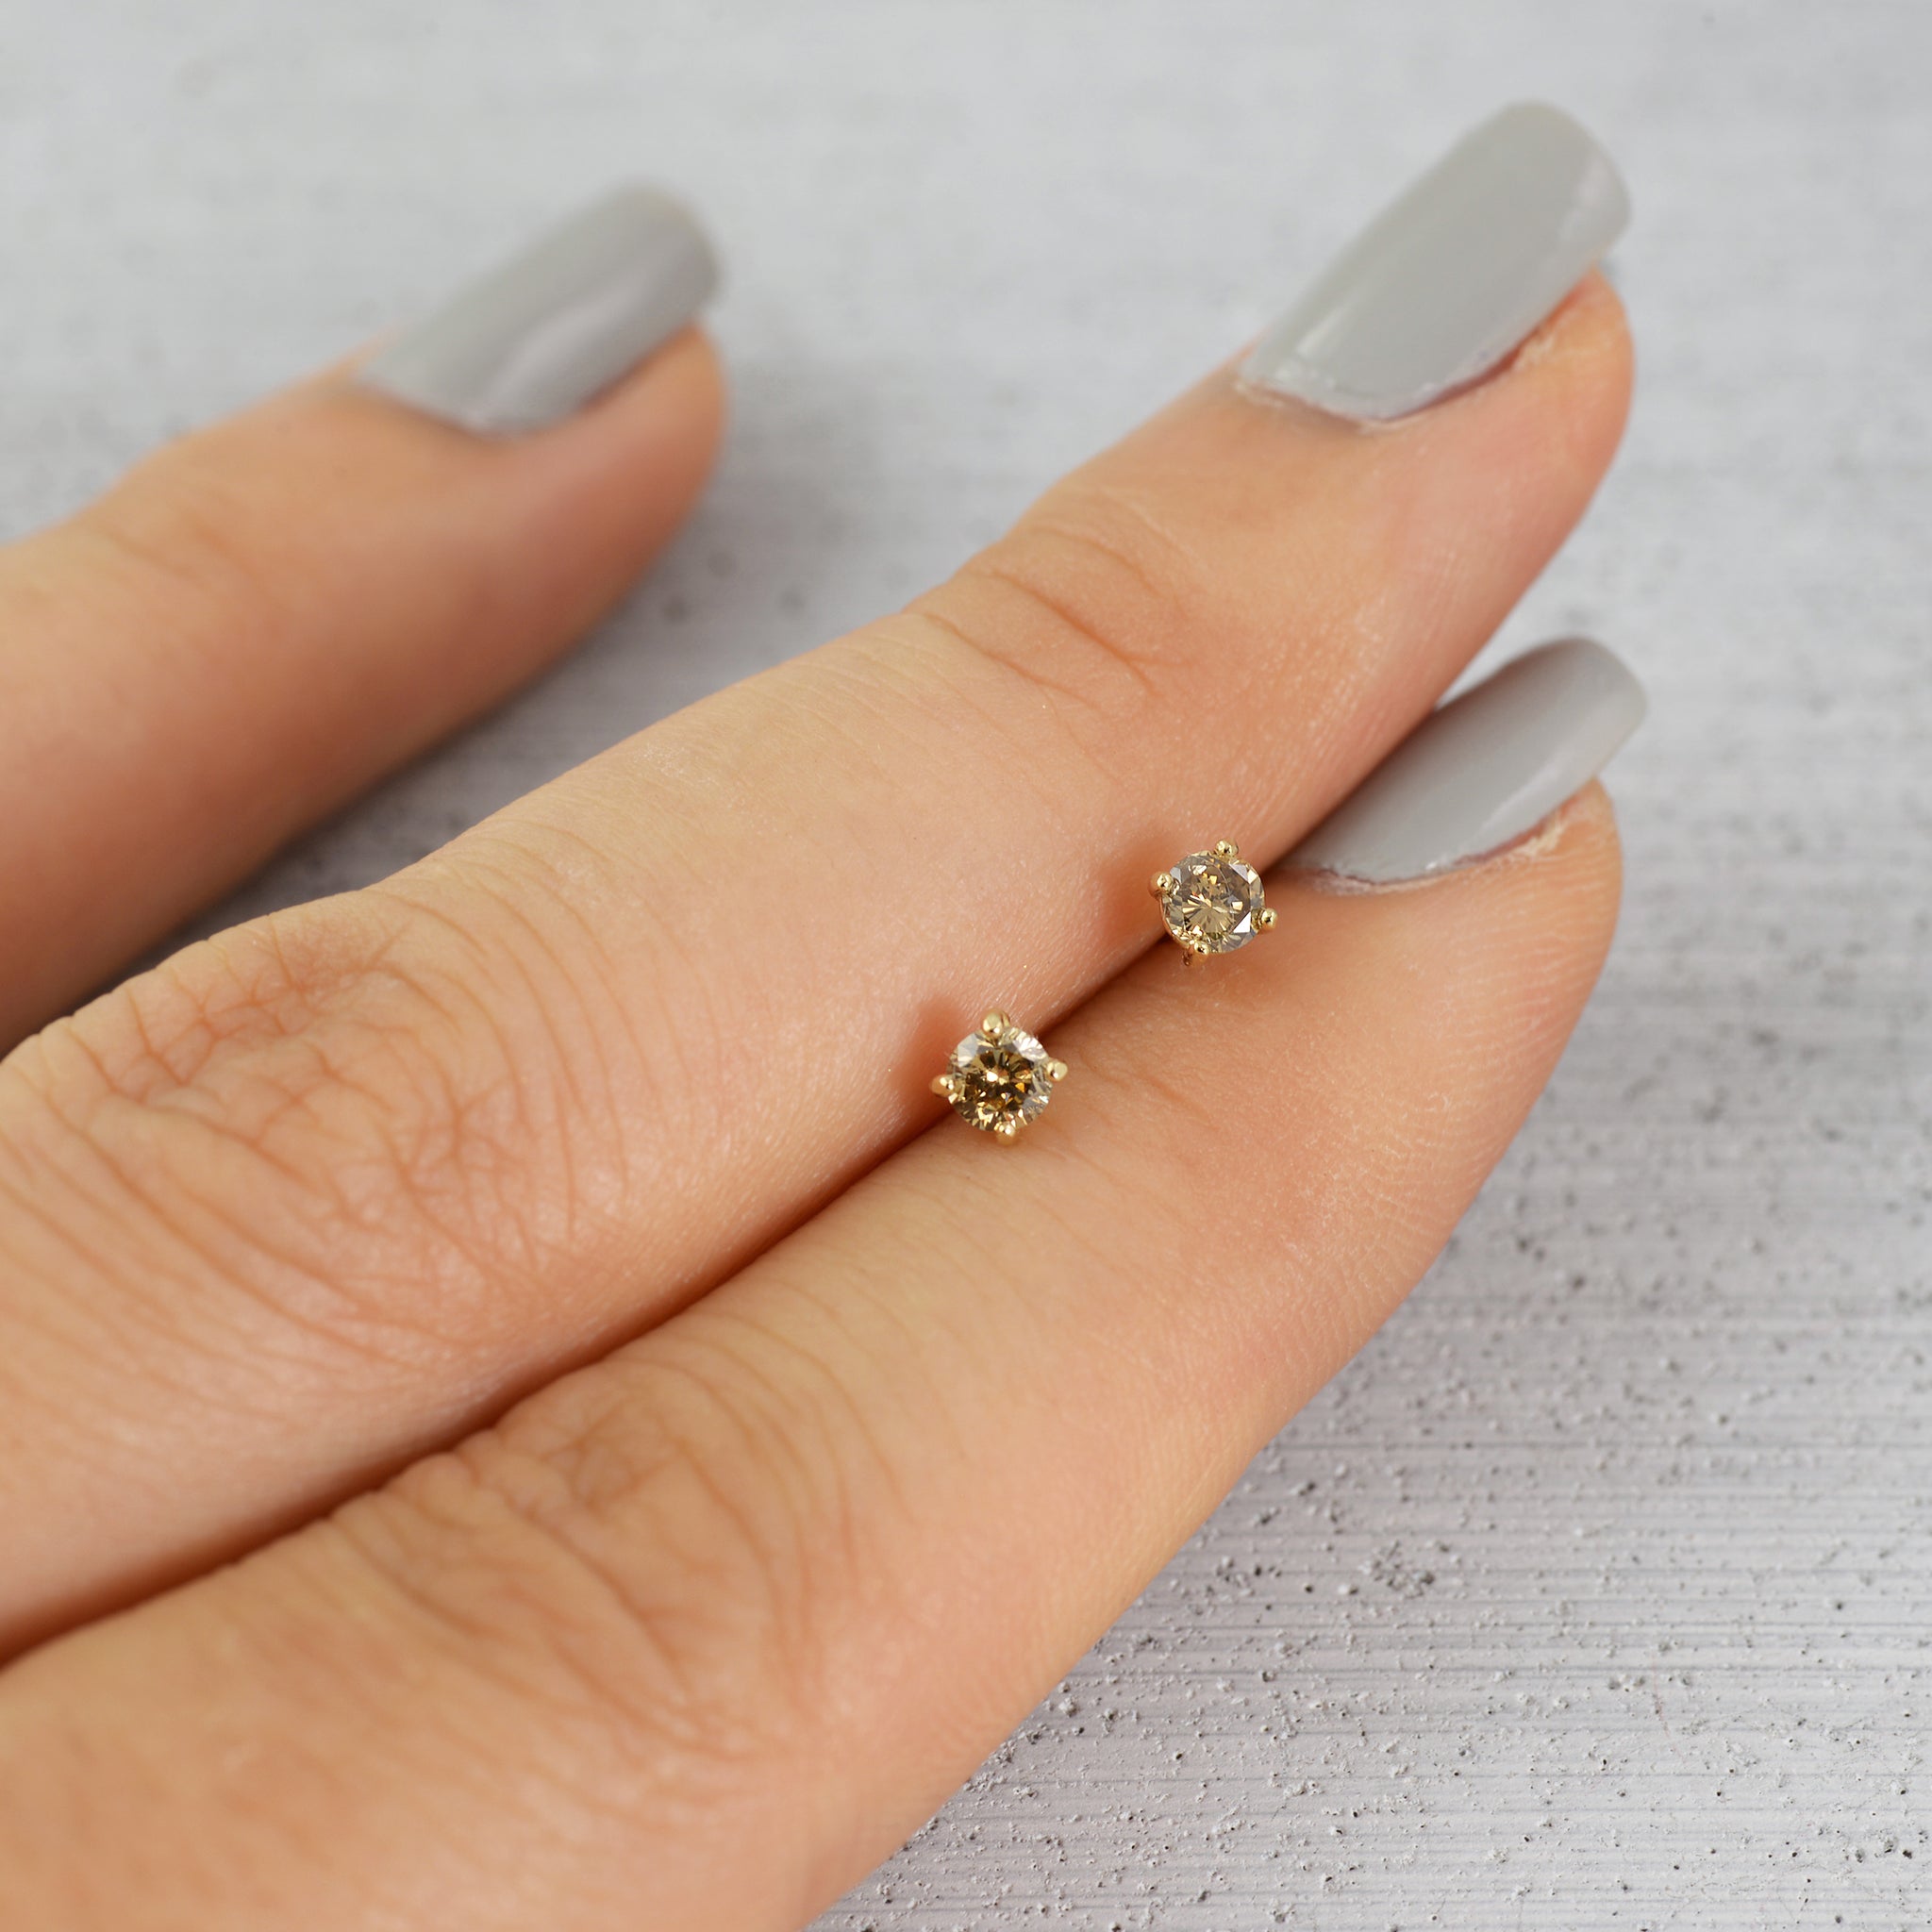 Venus solitaire diamond stud Earrings - 14K/ 18K Gold